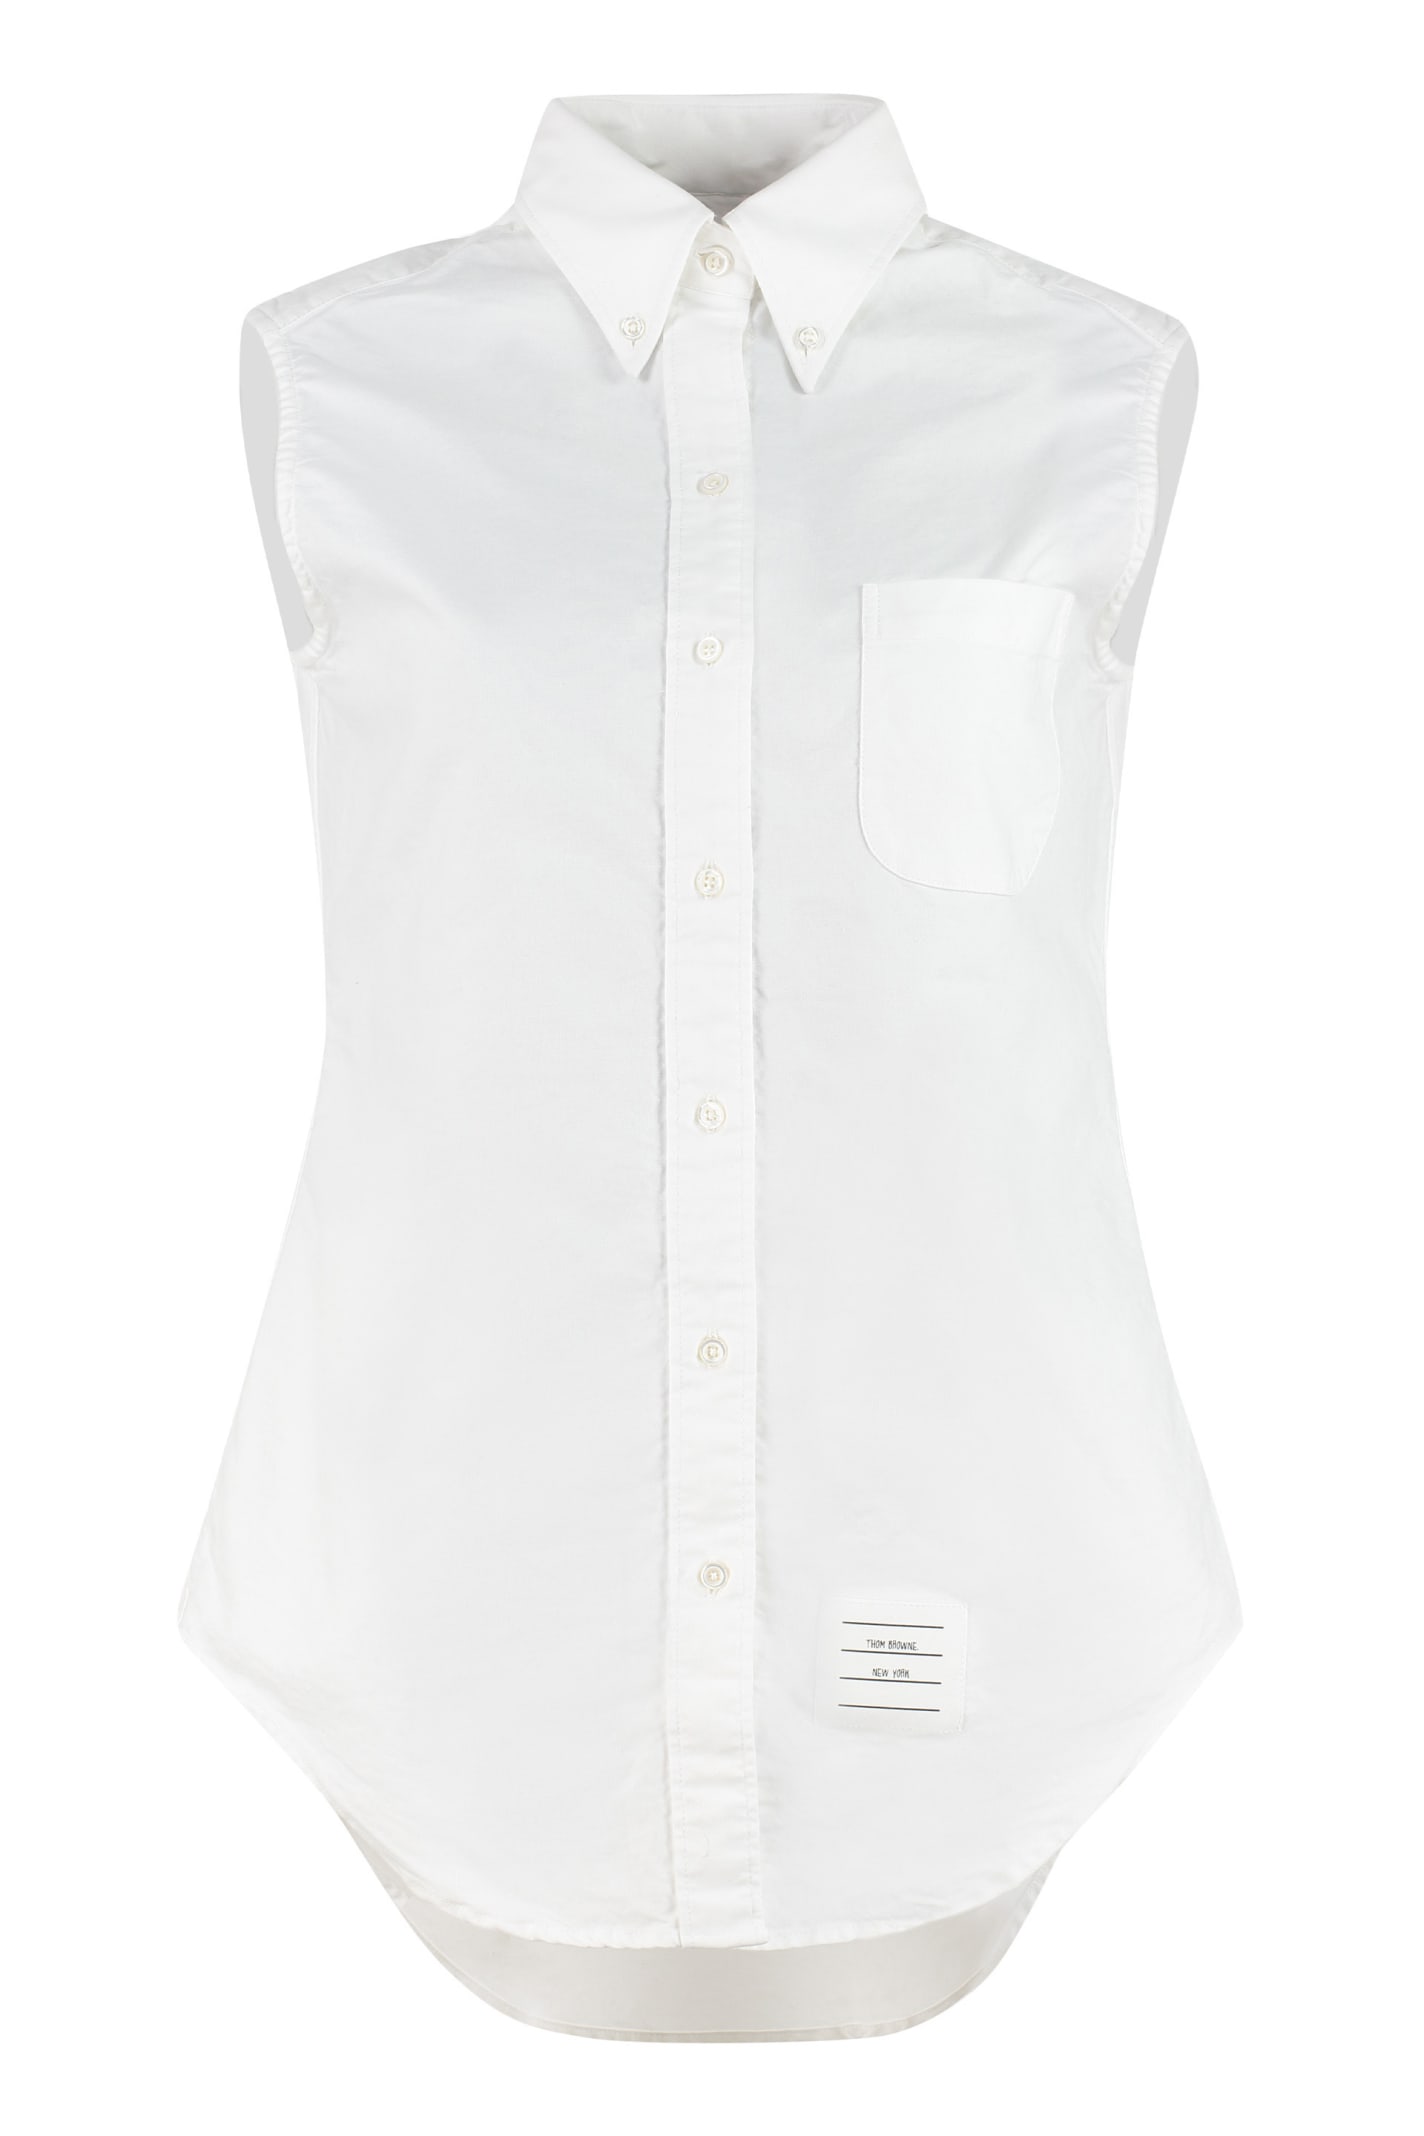 Thom Browne Cotton Sleeveless Shirt